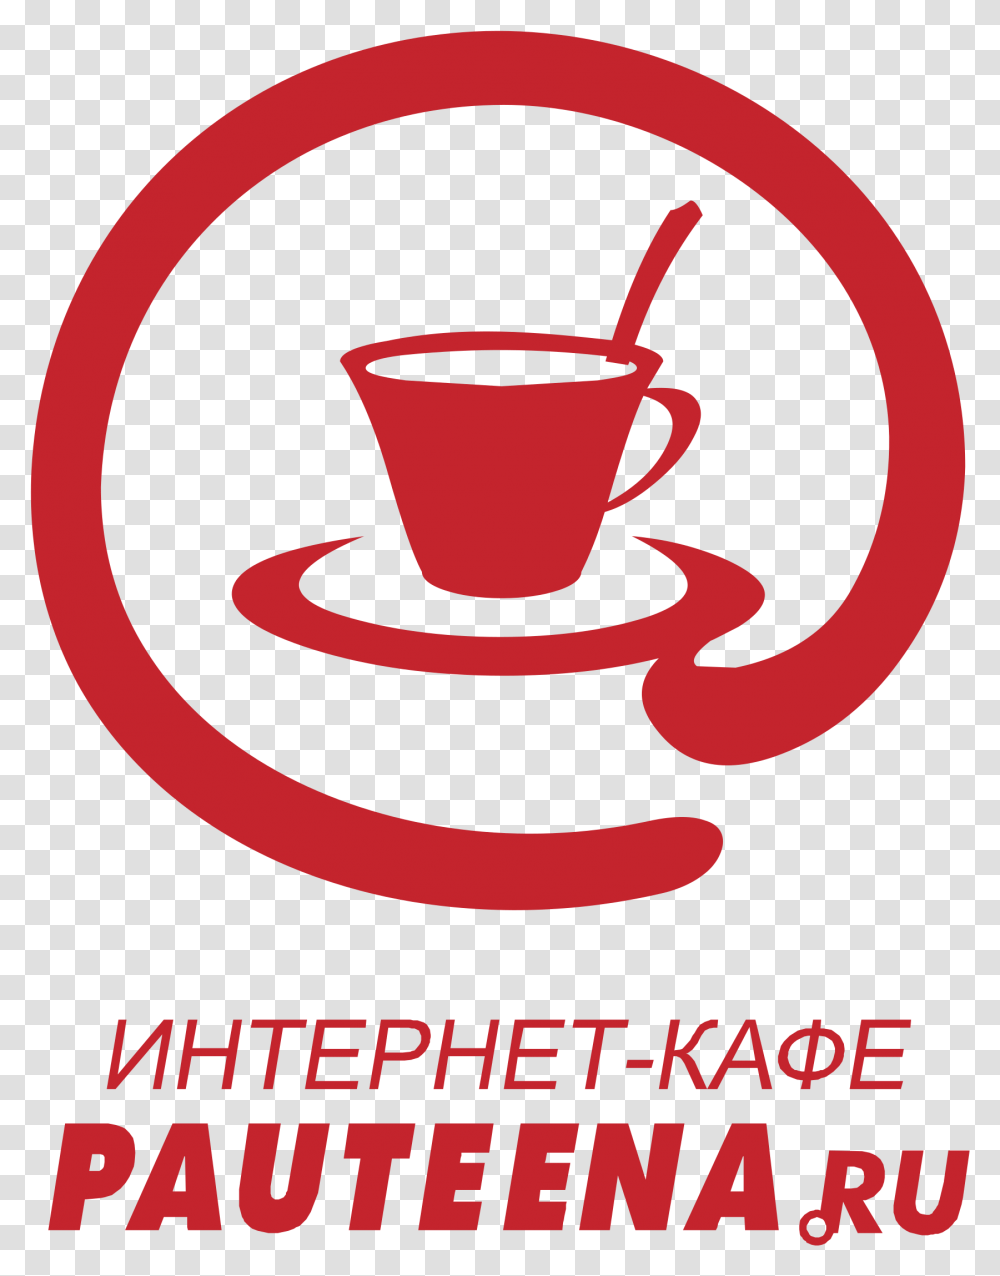 Pauteena Ru Logo Coffee Cup, Poster, Advertisement, Pottery, Saucer Transparent Png